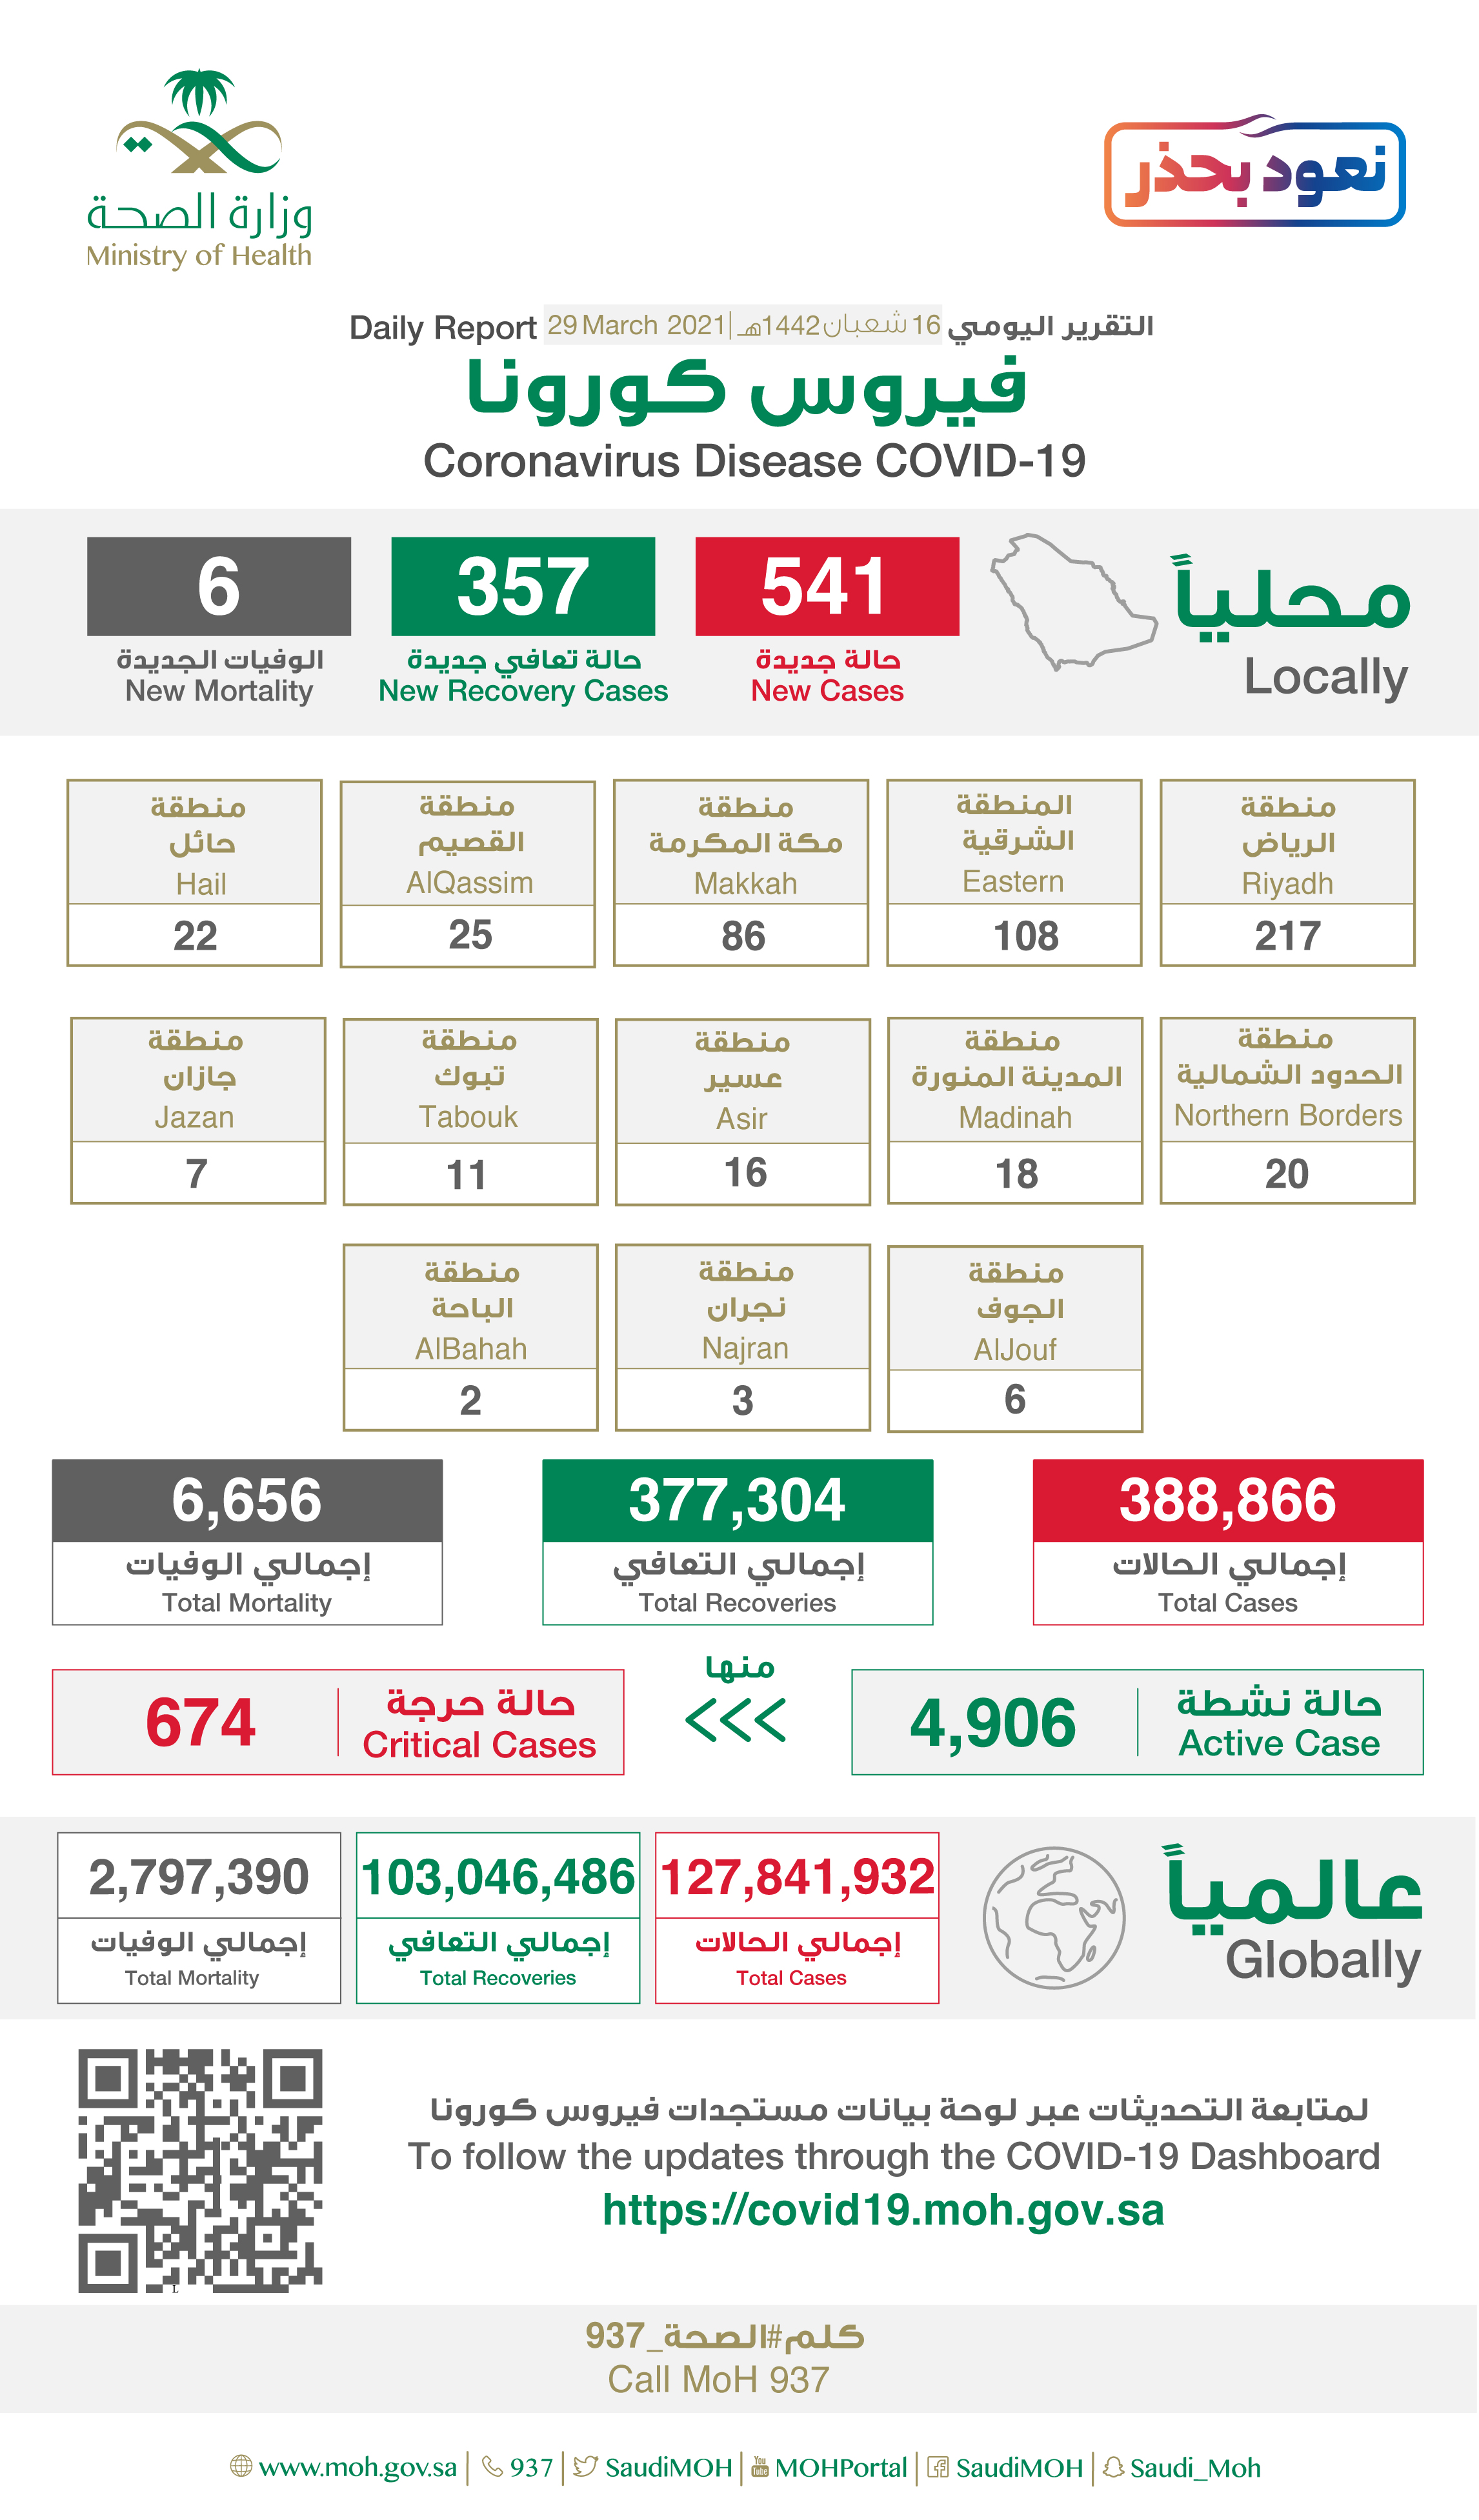 Saudi Arabia Coronavirus : Total Cases :388,866 , New Cases : 541, Cured : 377,304 , Deaths: 6,656, Active Cases : 4,906